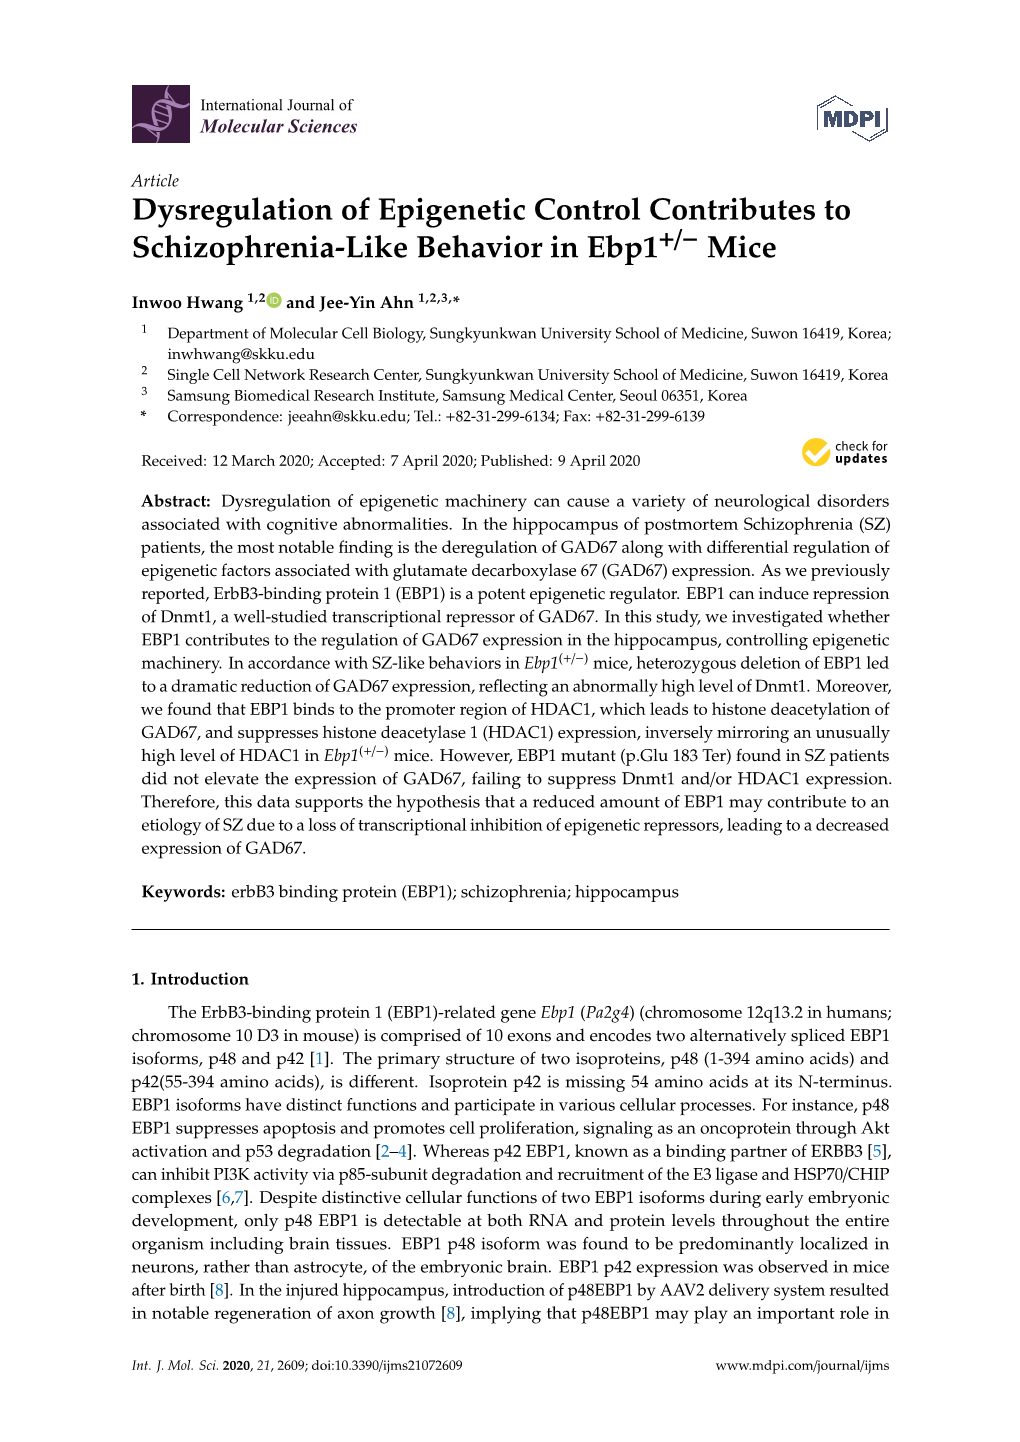 Dysregulation of Epigenetic Control Contributes to Schizophrenia-Like Behavior in Ebp1+/- Mice